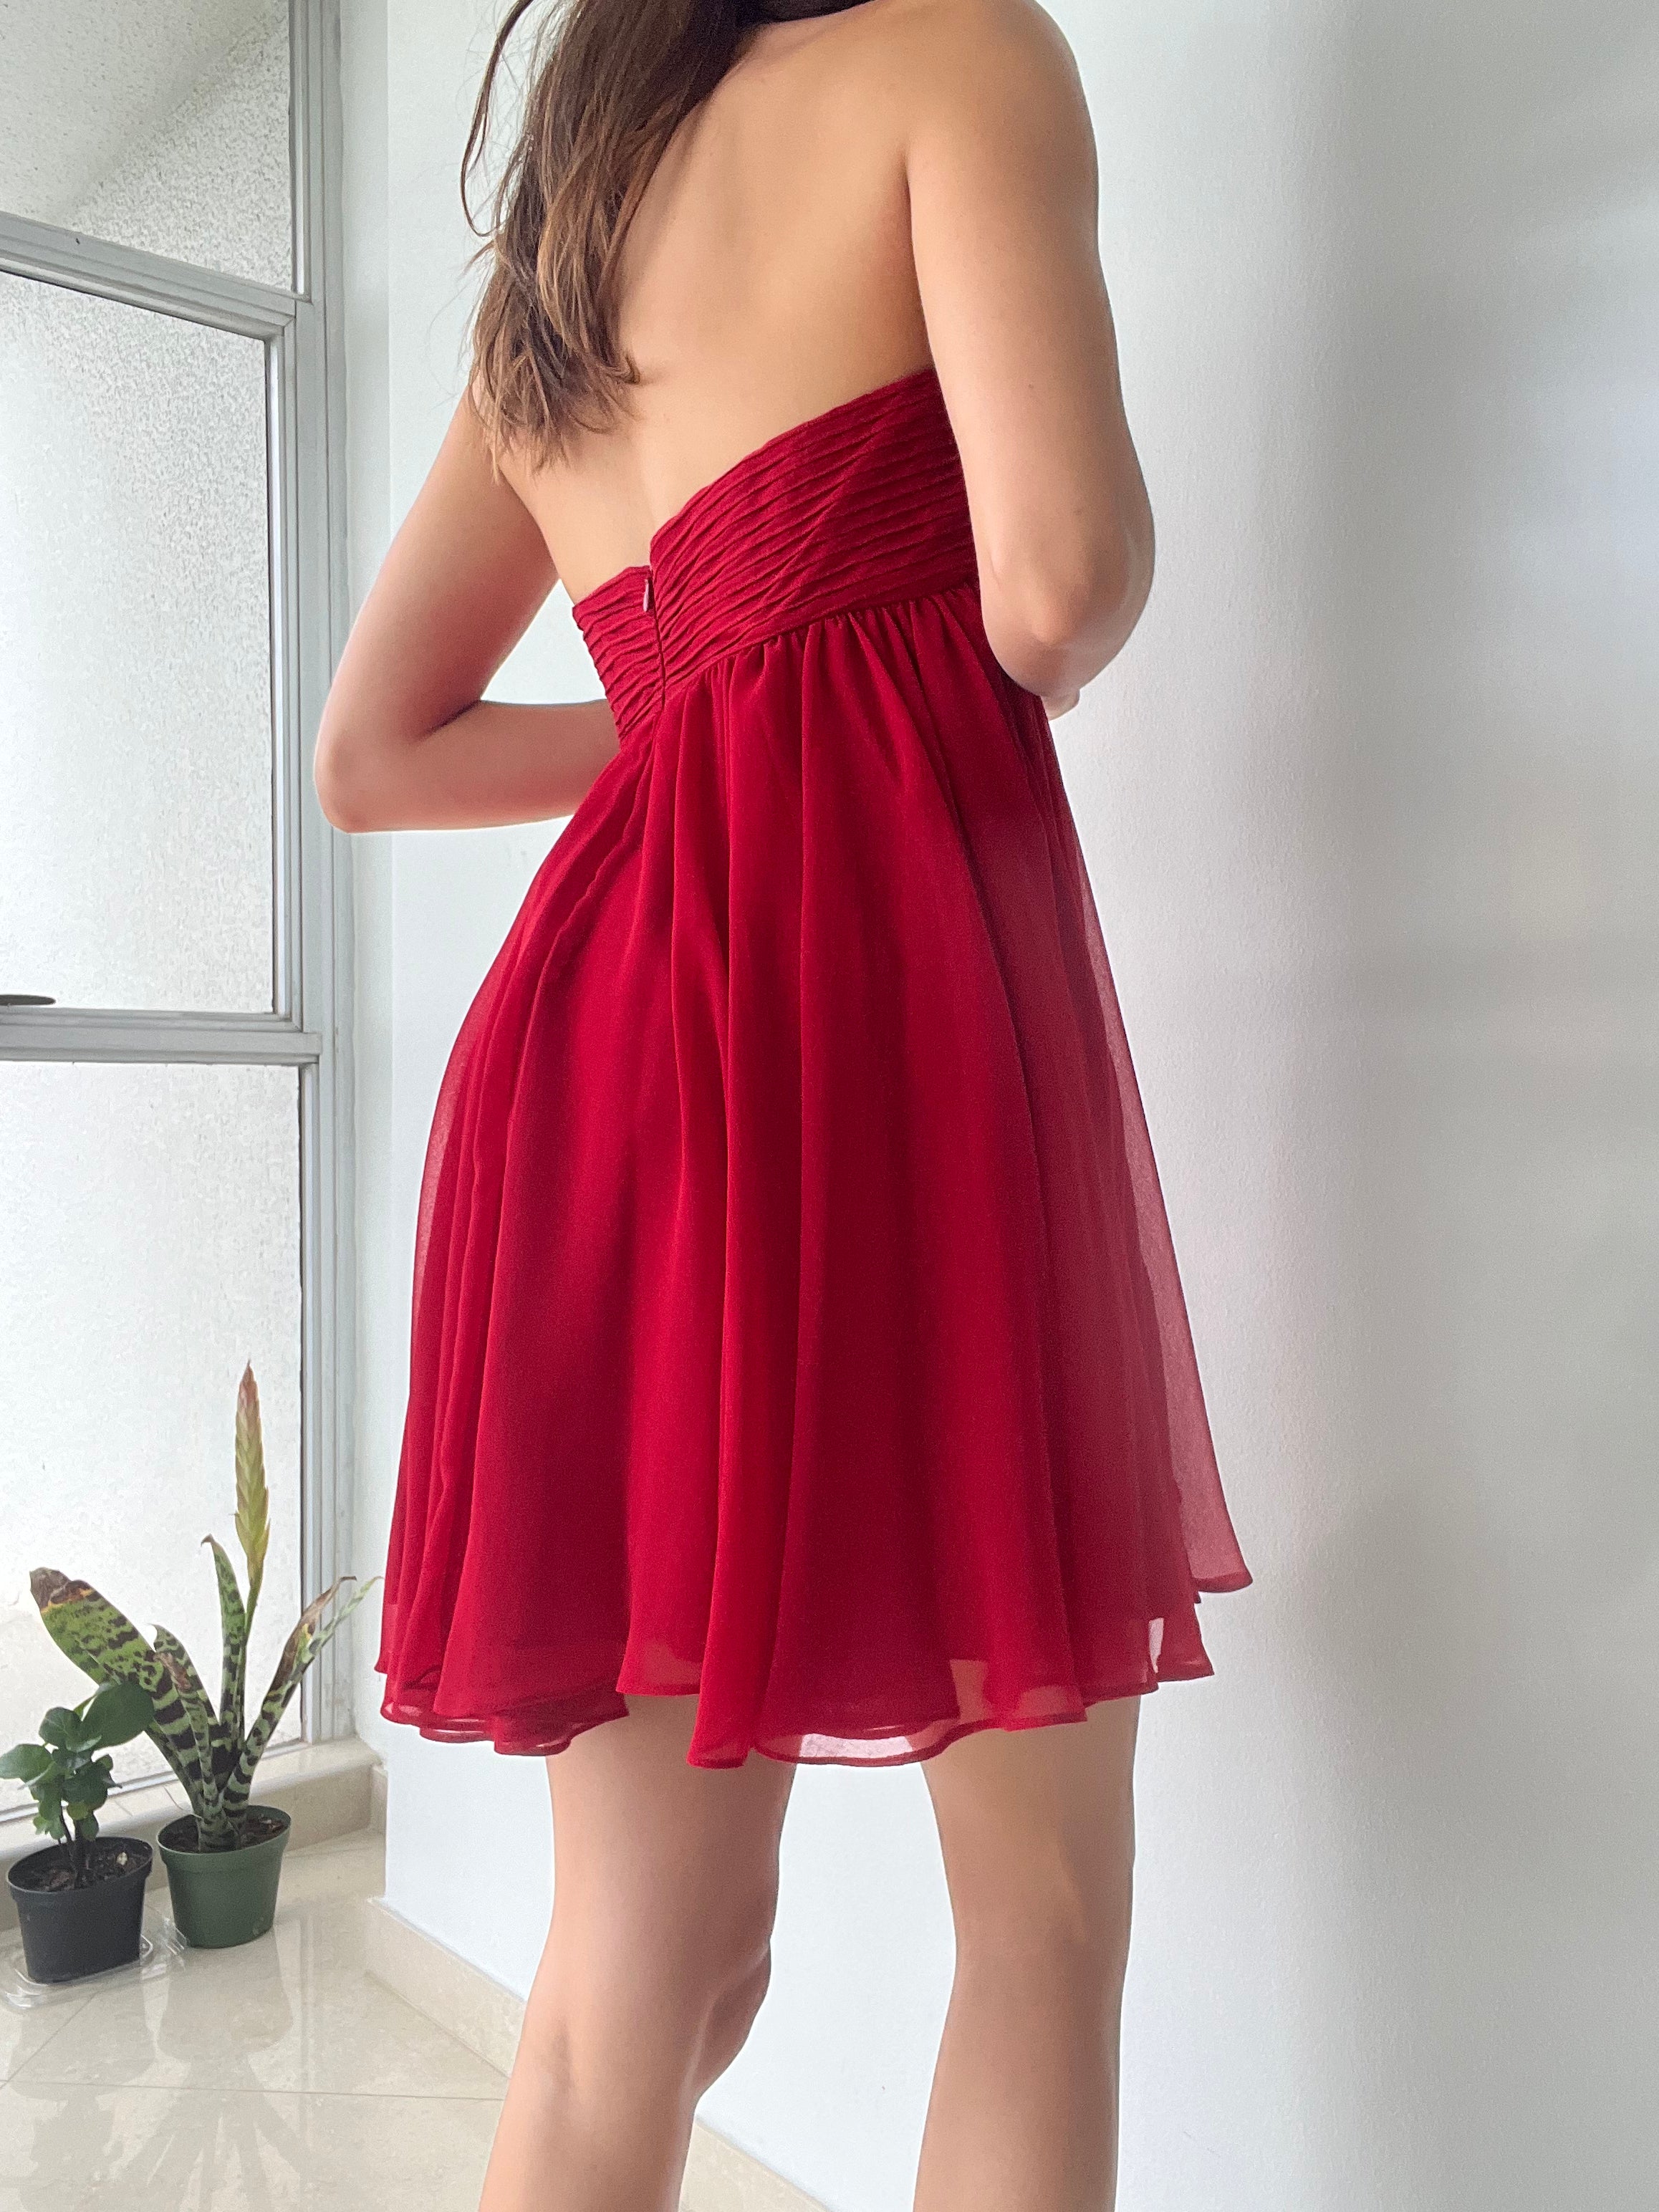 Zac Posen Red Mini Gown